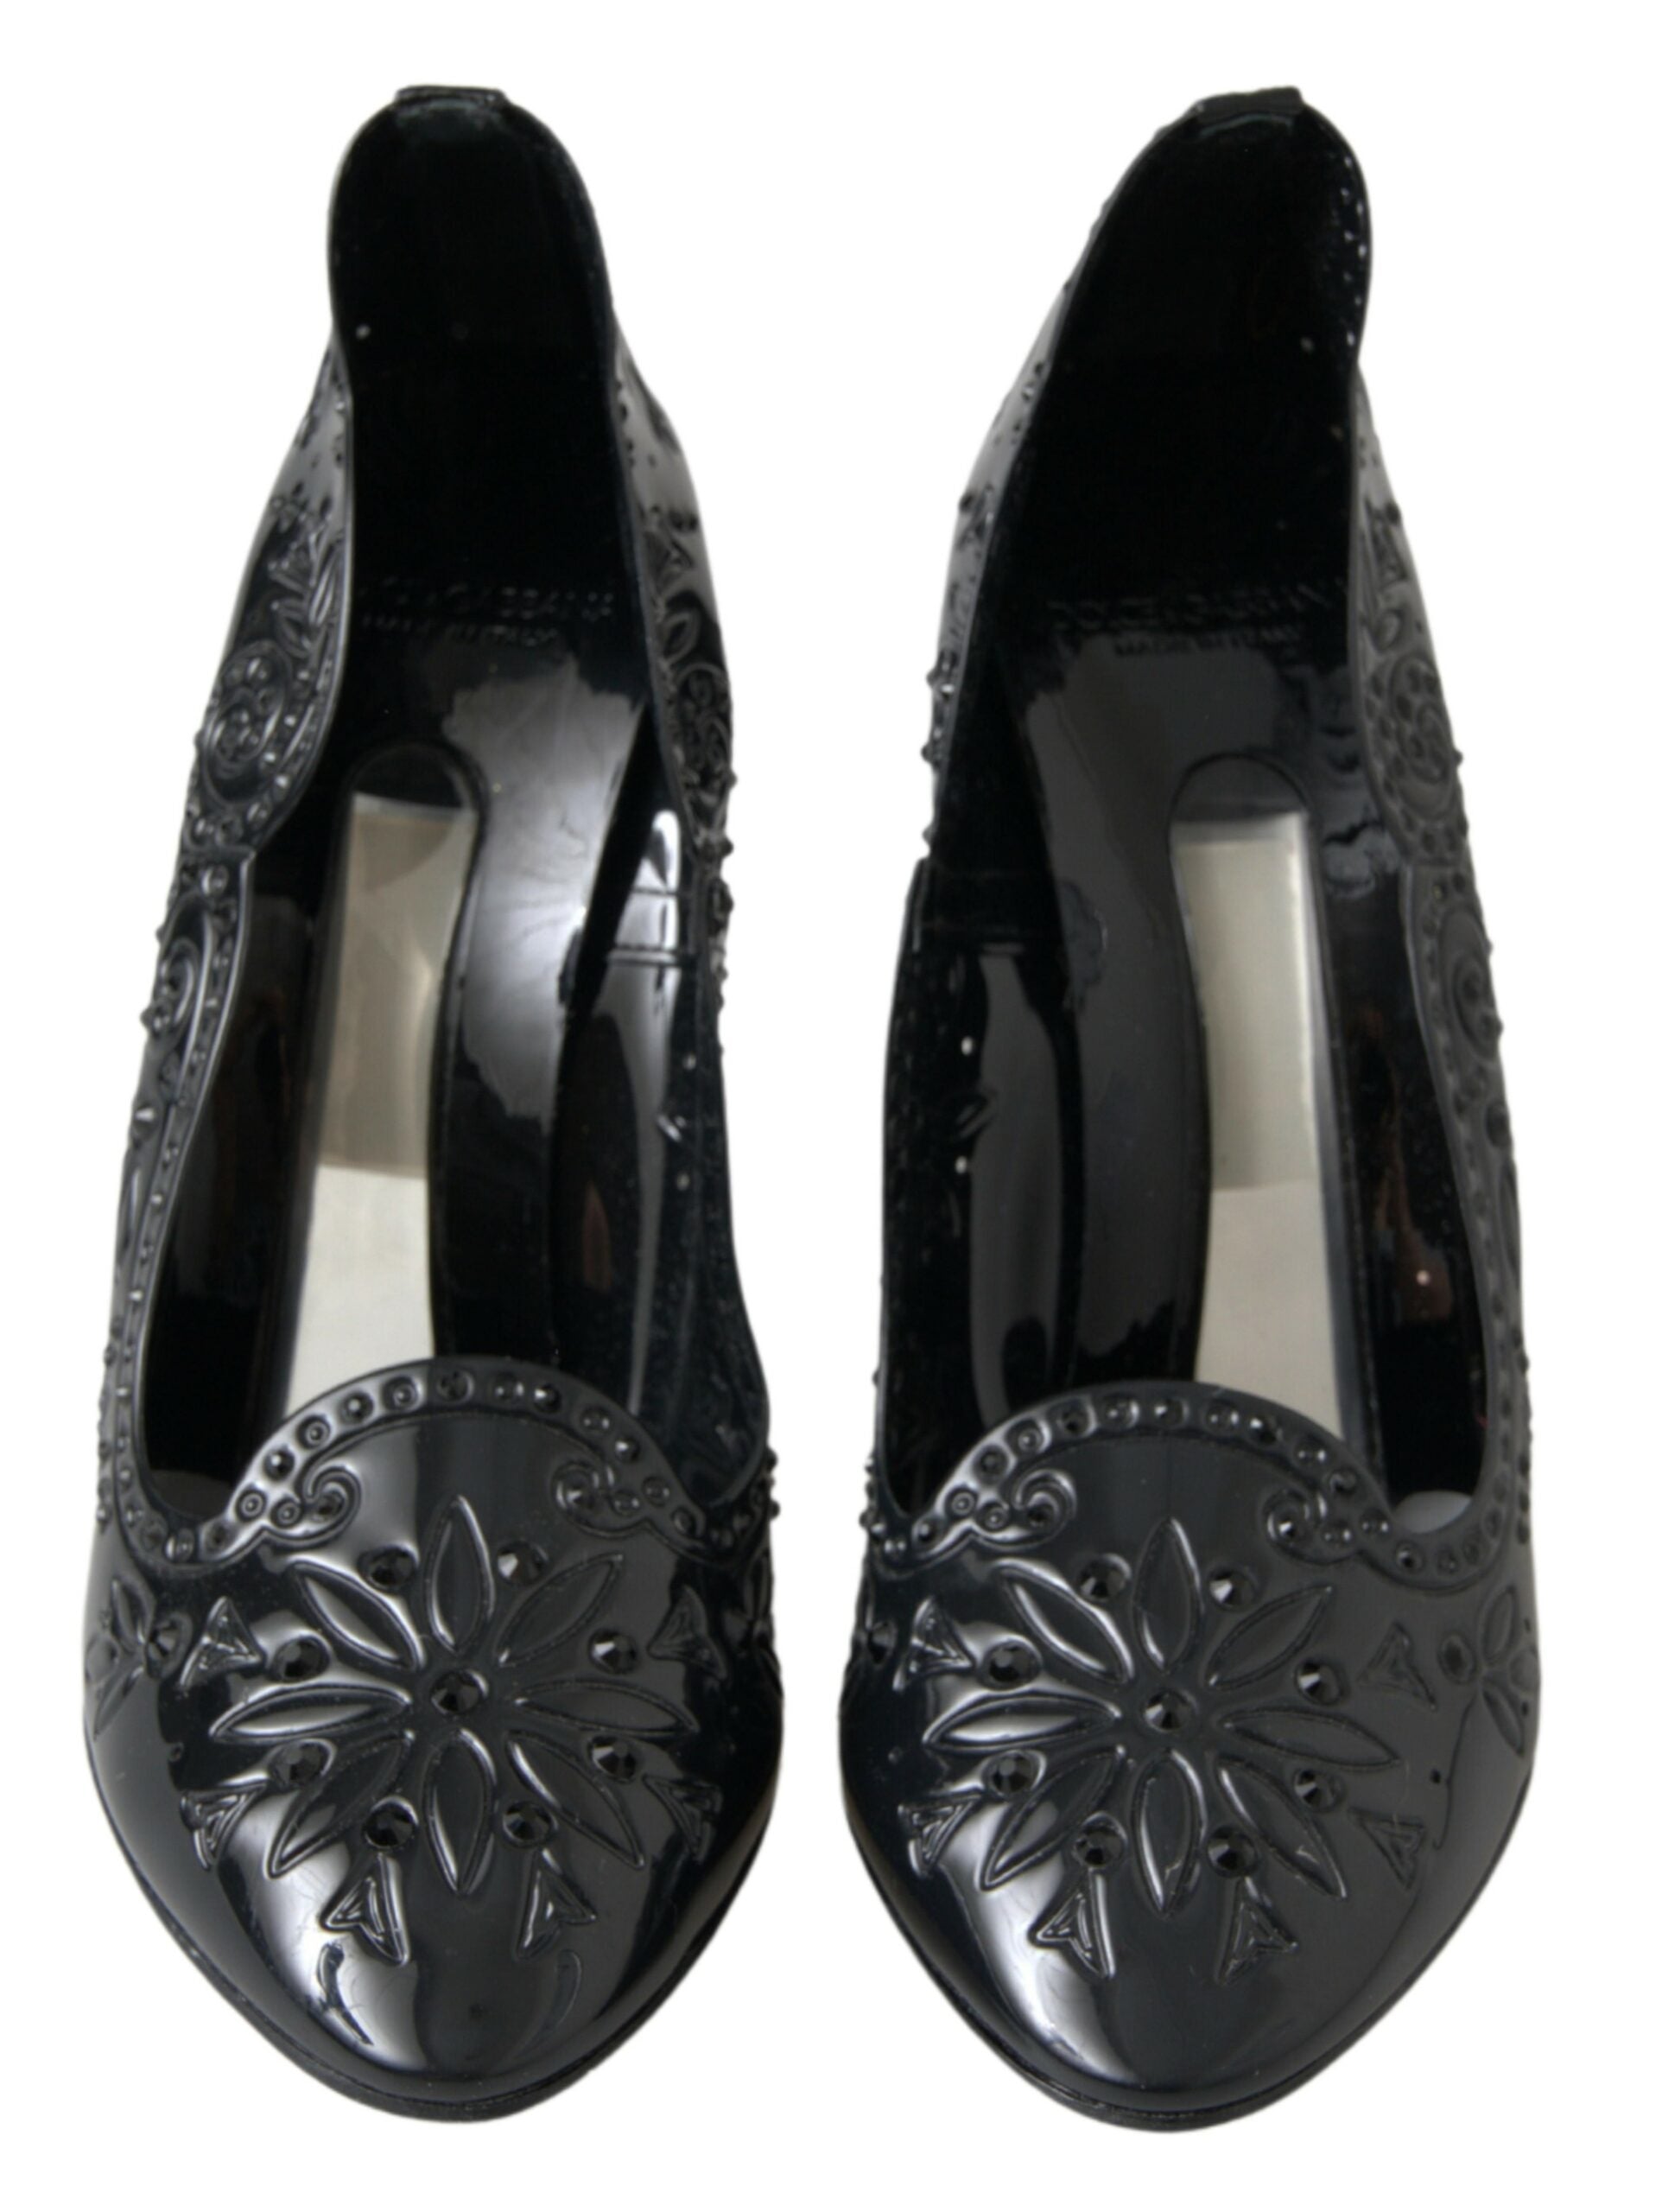 Dolce & Gabbana Black CINDERELLA Floral Crystal Heels Shoes | Fashionsarah.com